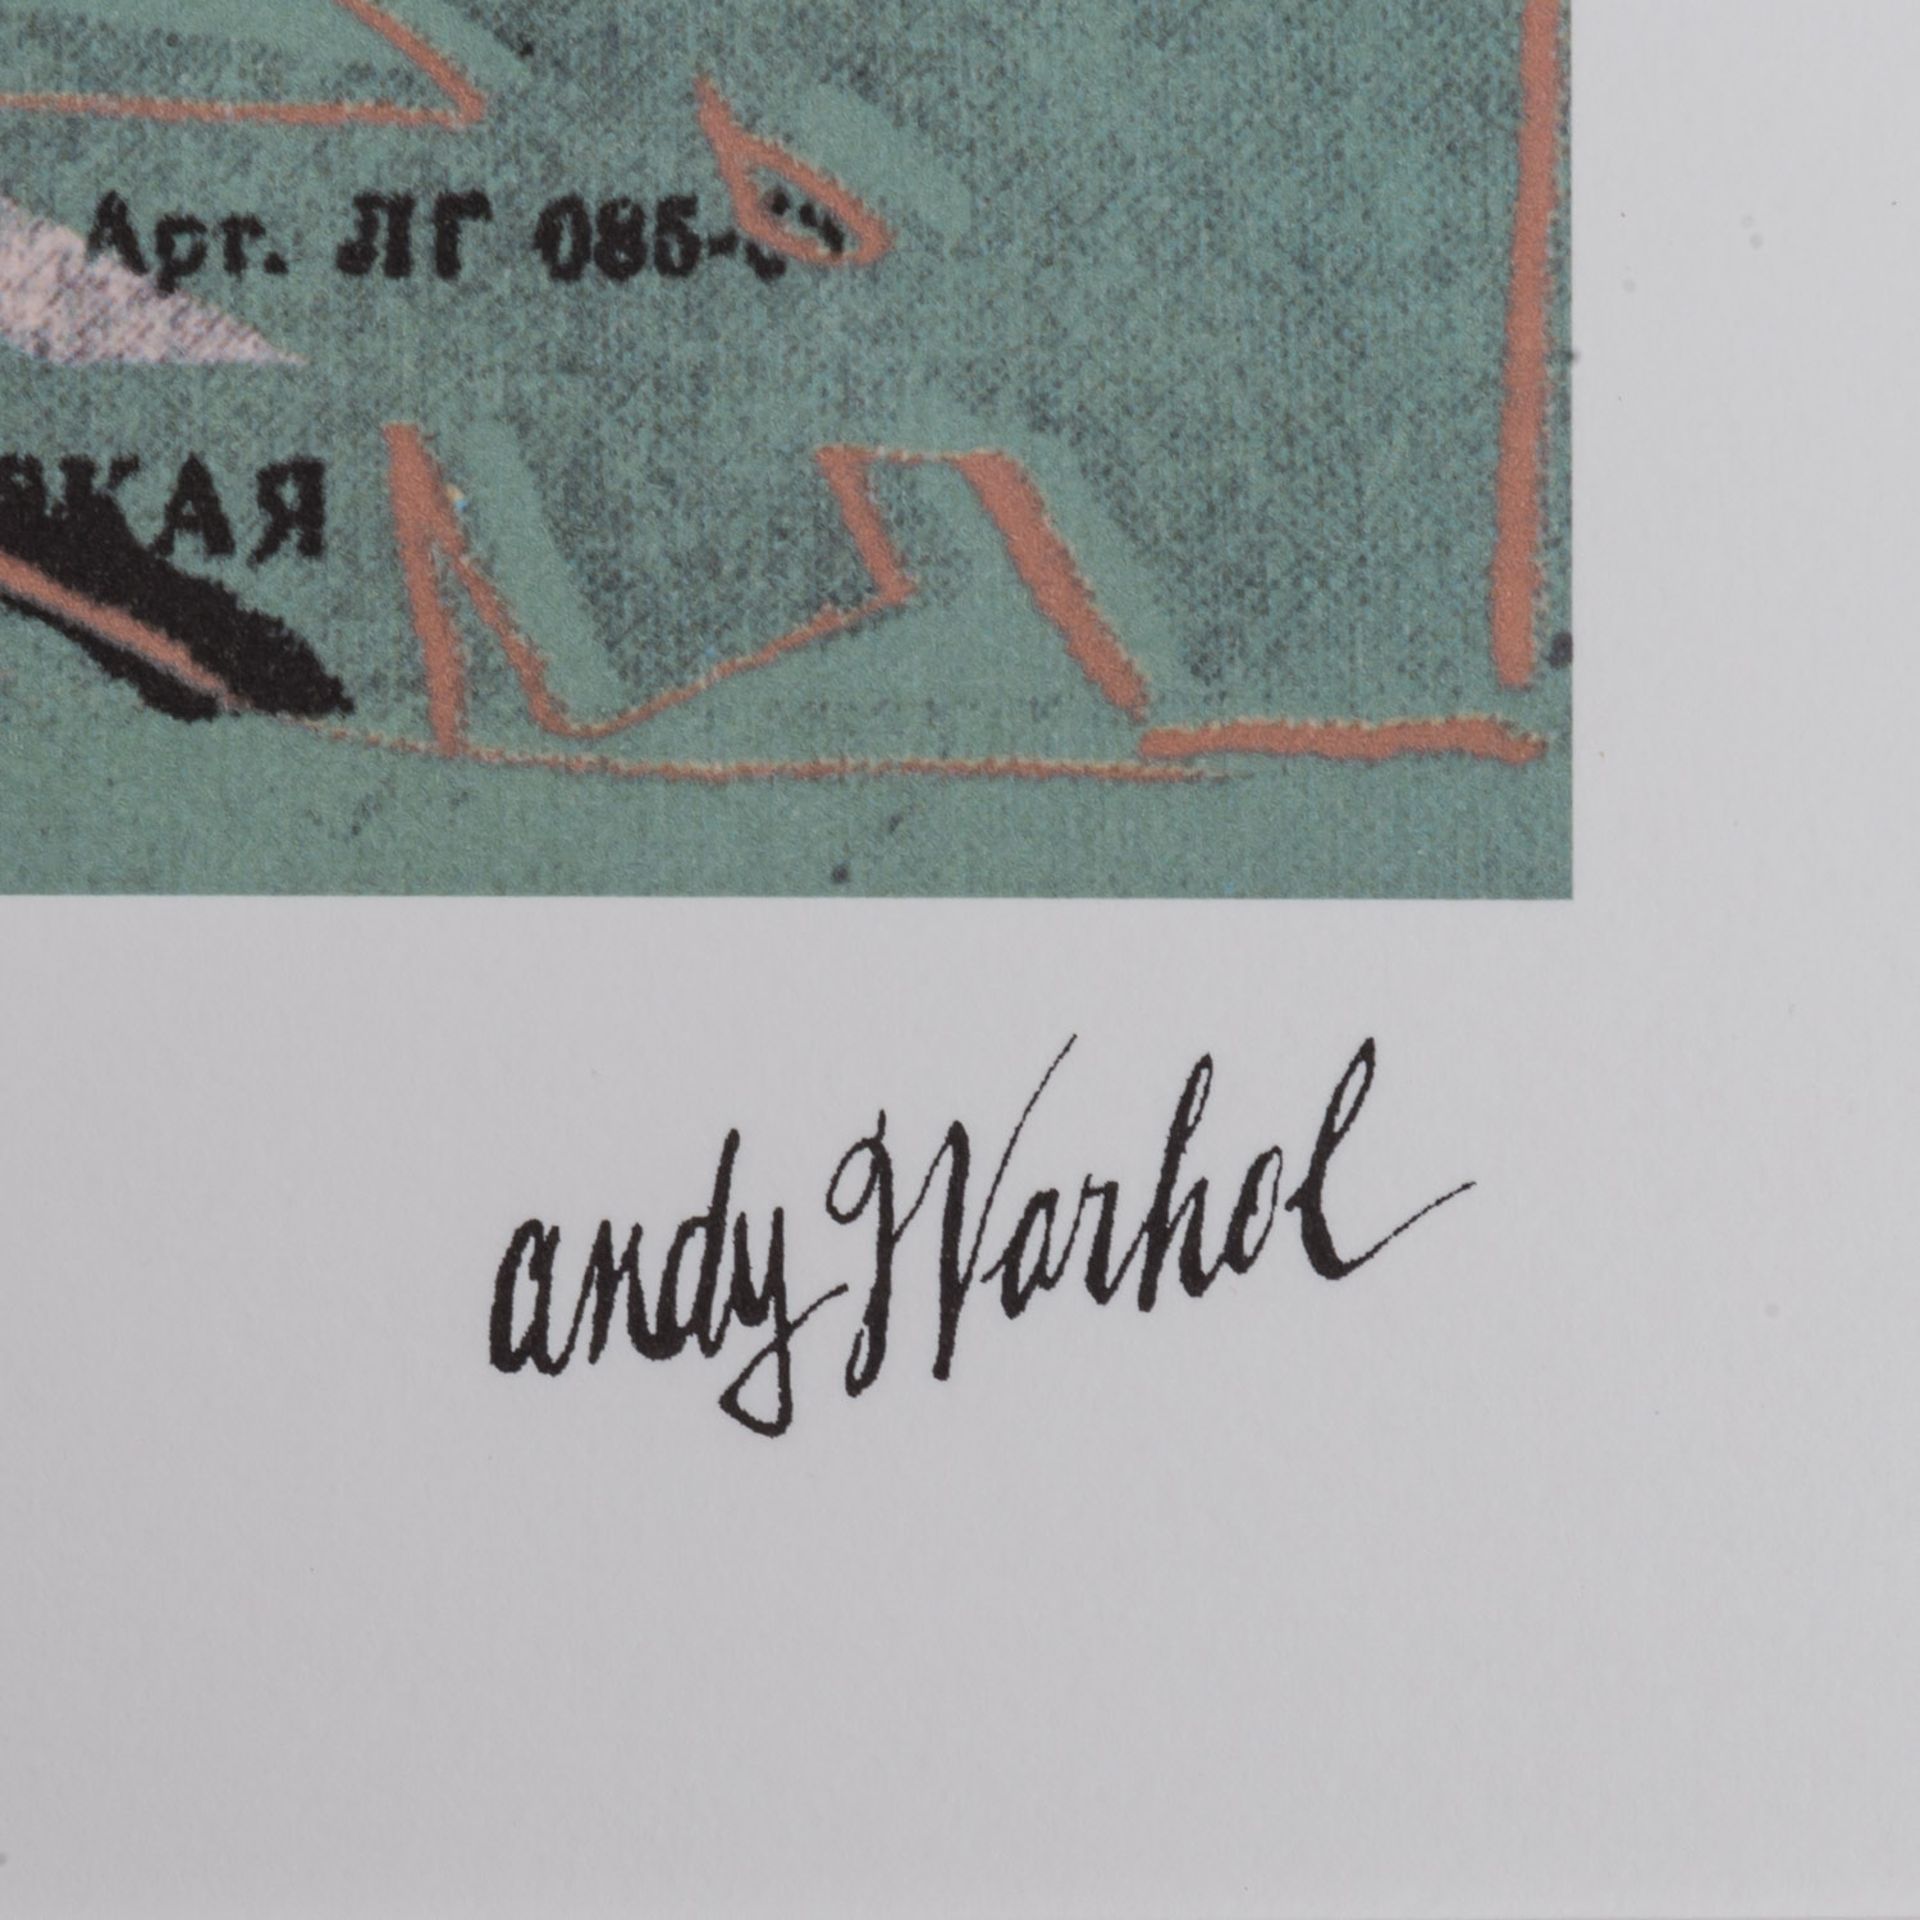 WARHOL, ANDY (1928-1987) "Monkey" - Image 2 of 4